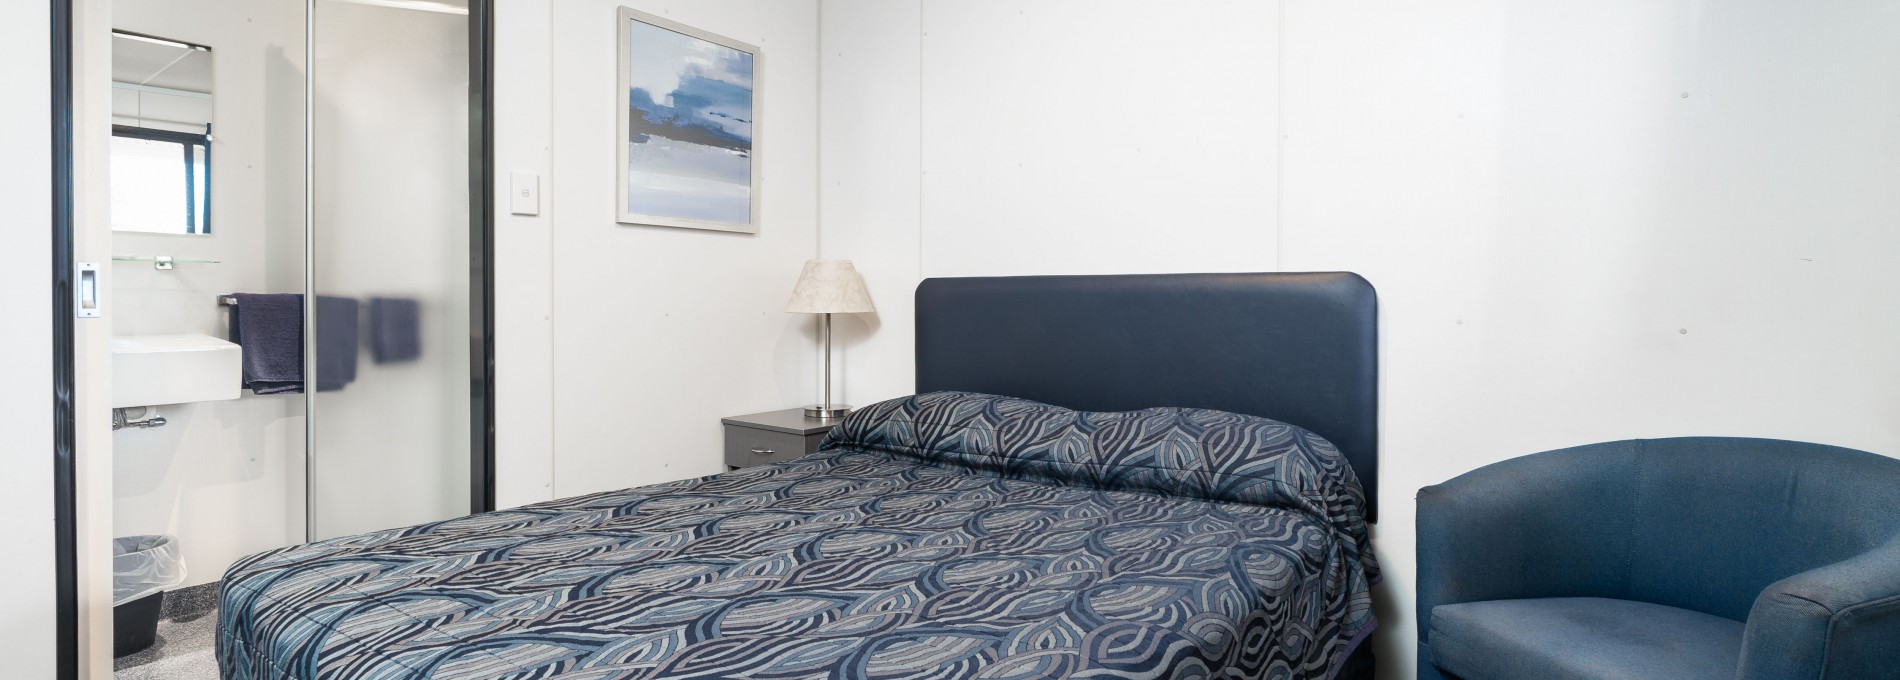 Interior of remote accommodation Ausco suite